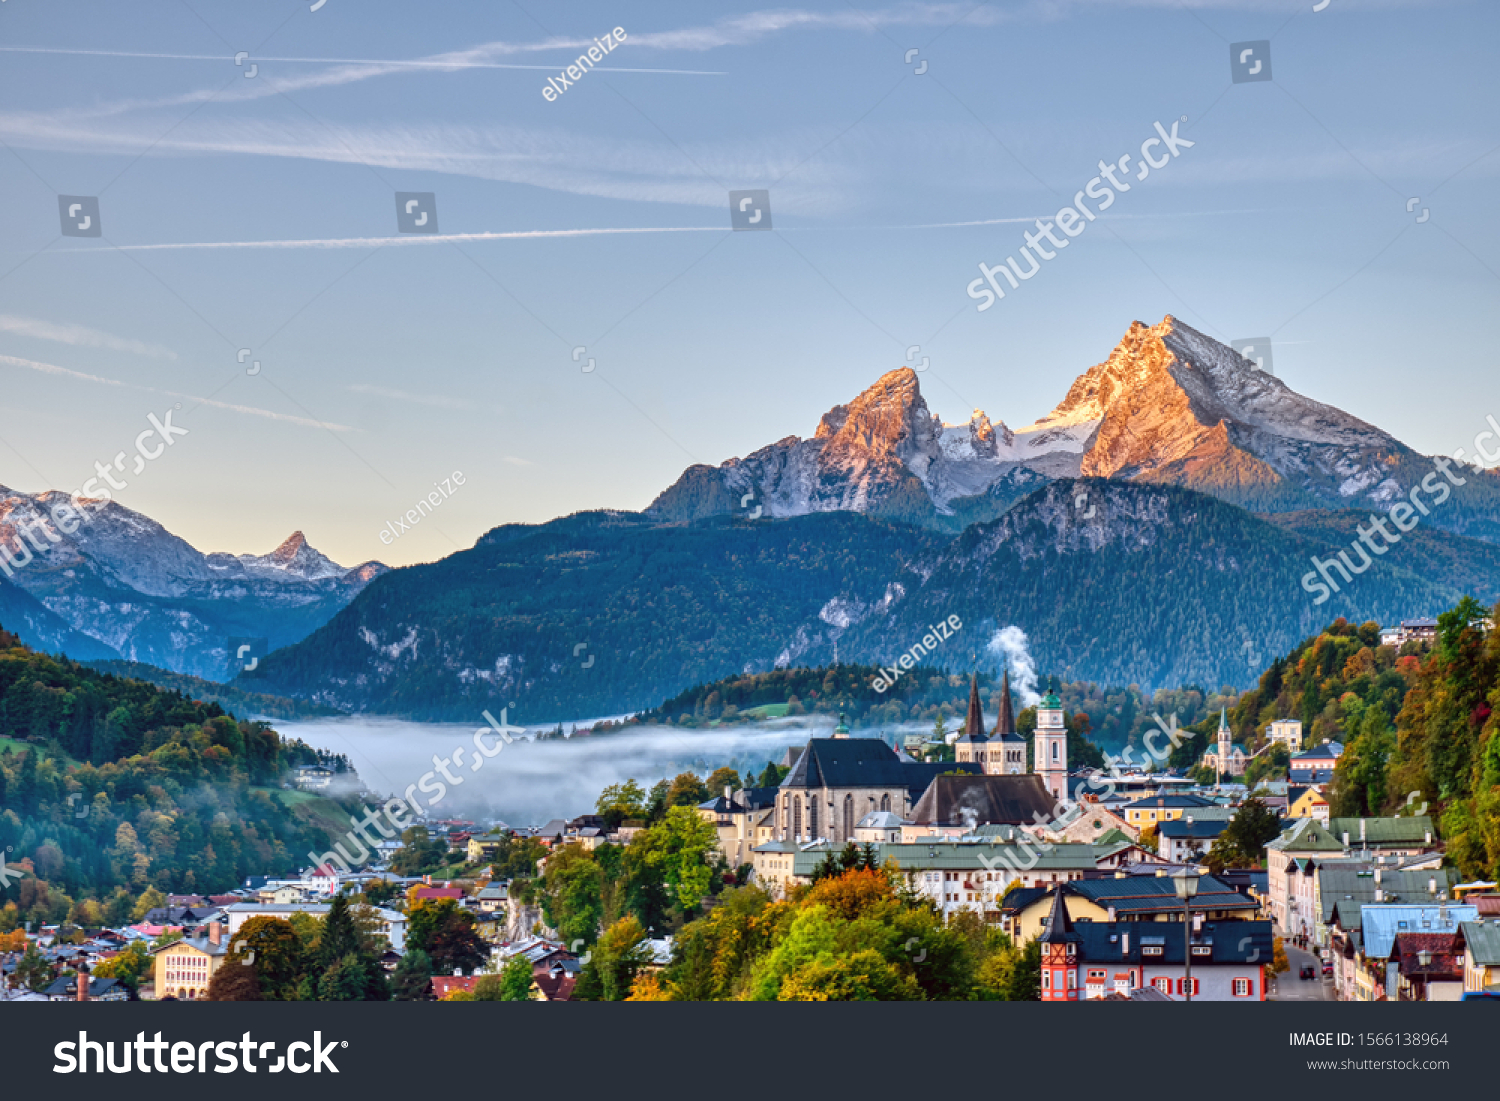 The city of Berchtesgaden and Mount Watzmann in the Bavarian Alps  #1566138964